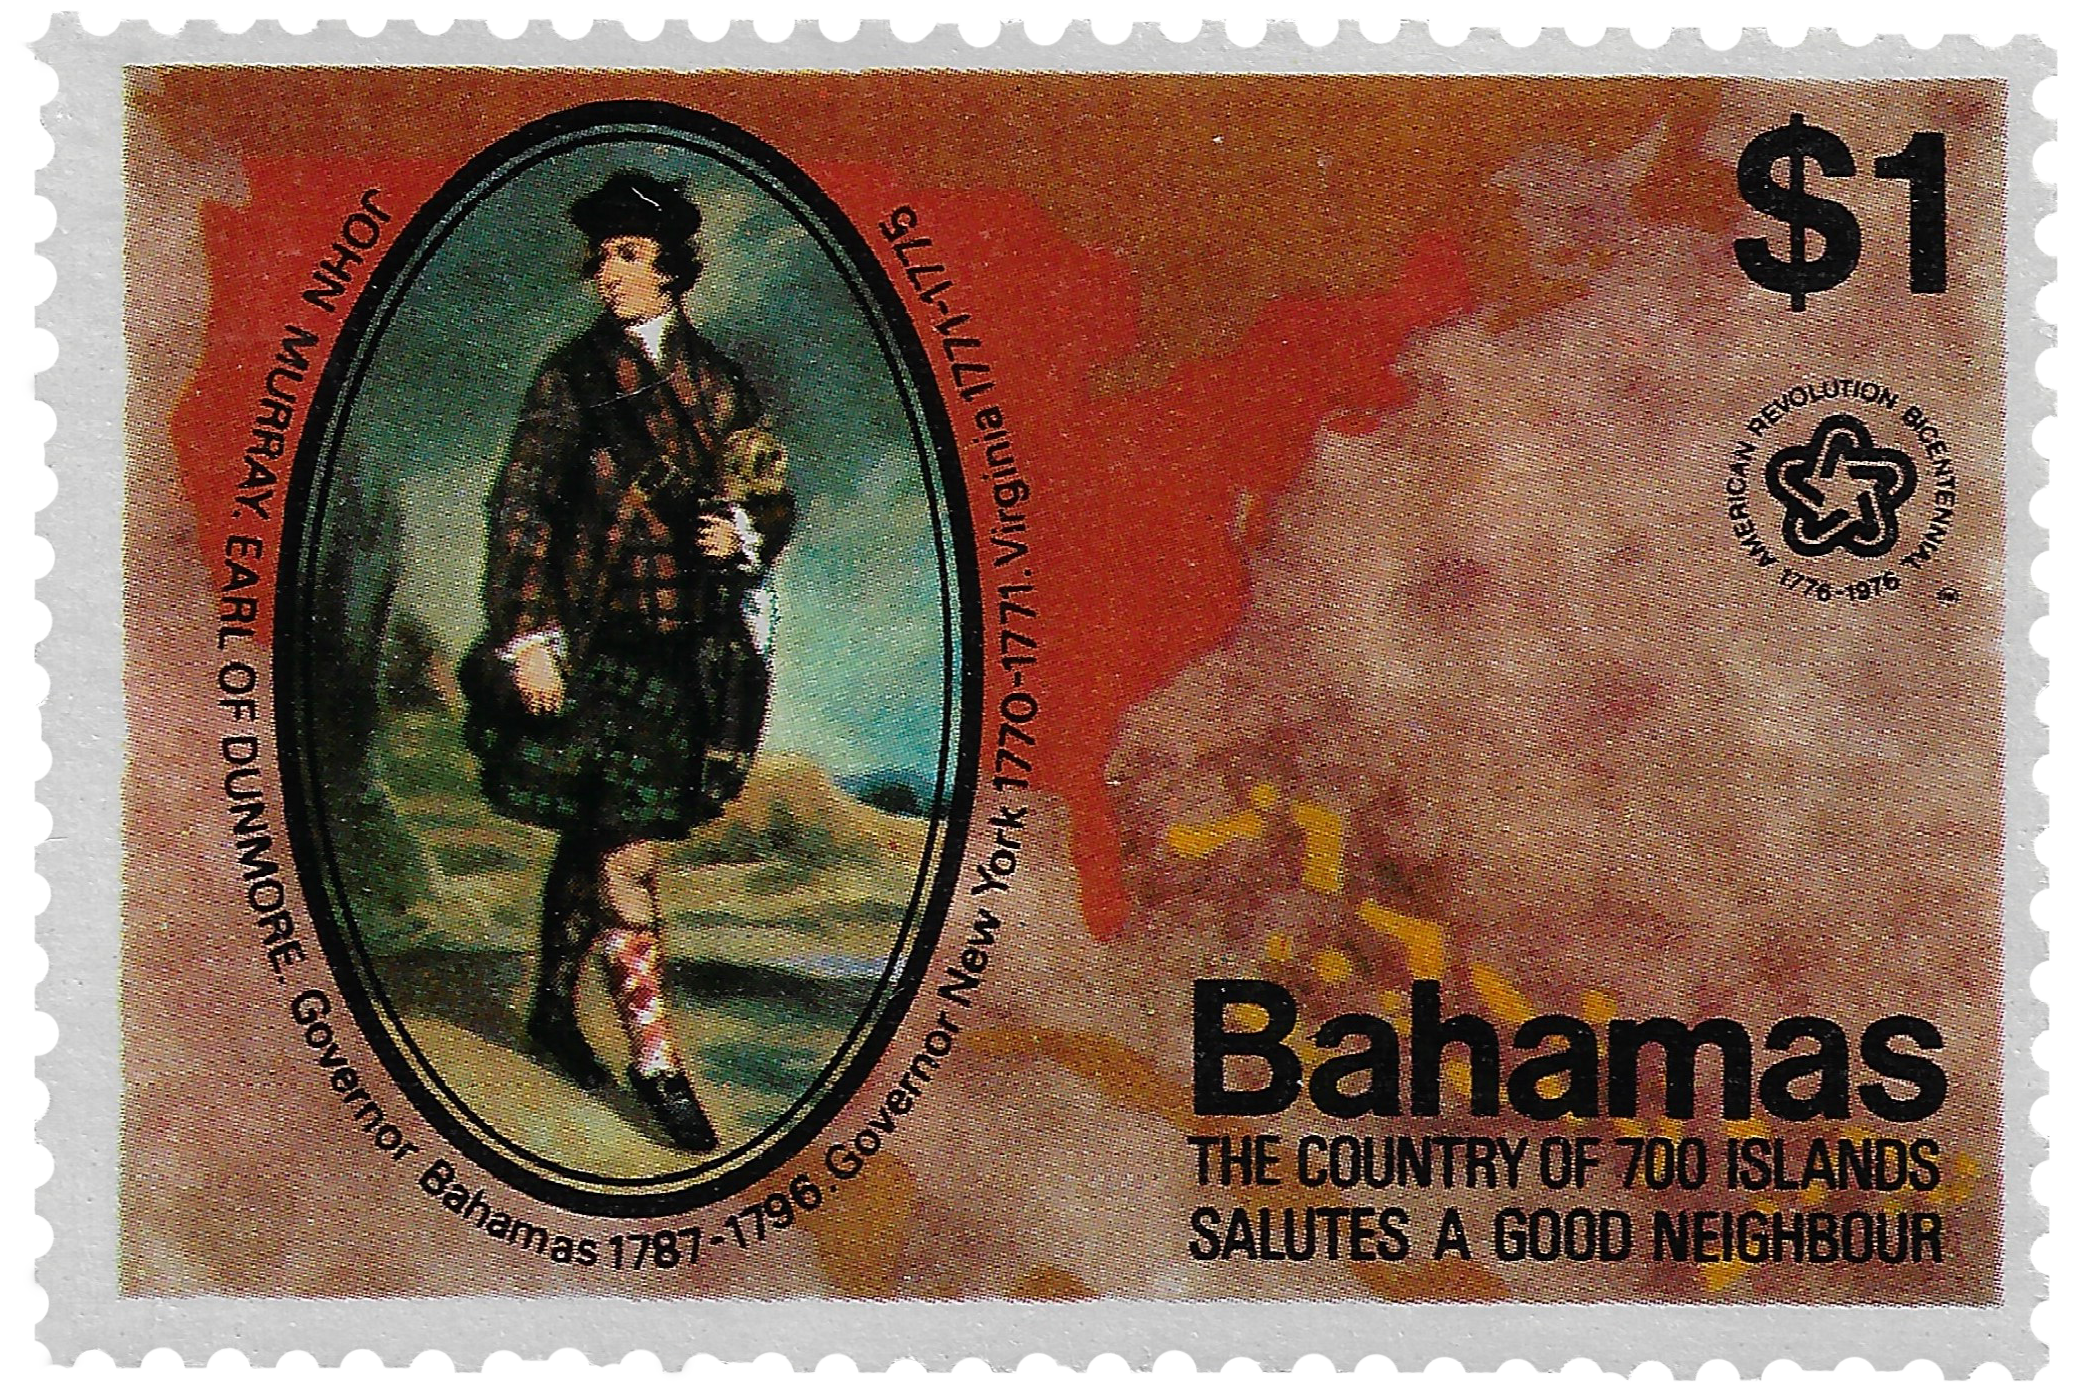 1d 1976, Bahamas, Bicentennial Revolution, United States of America 1776-1977, John Murray